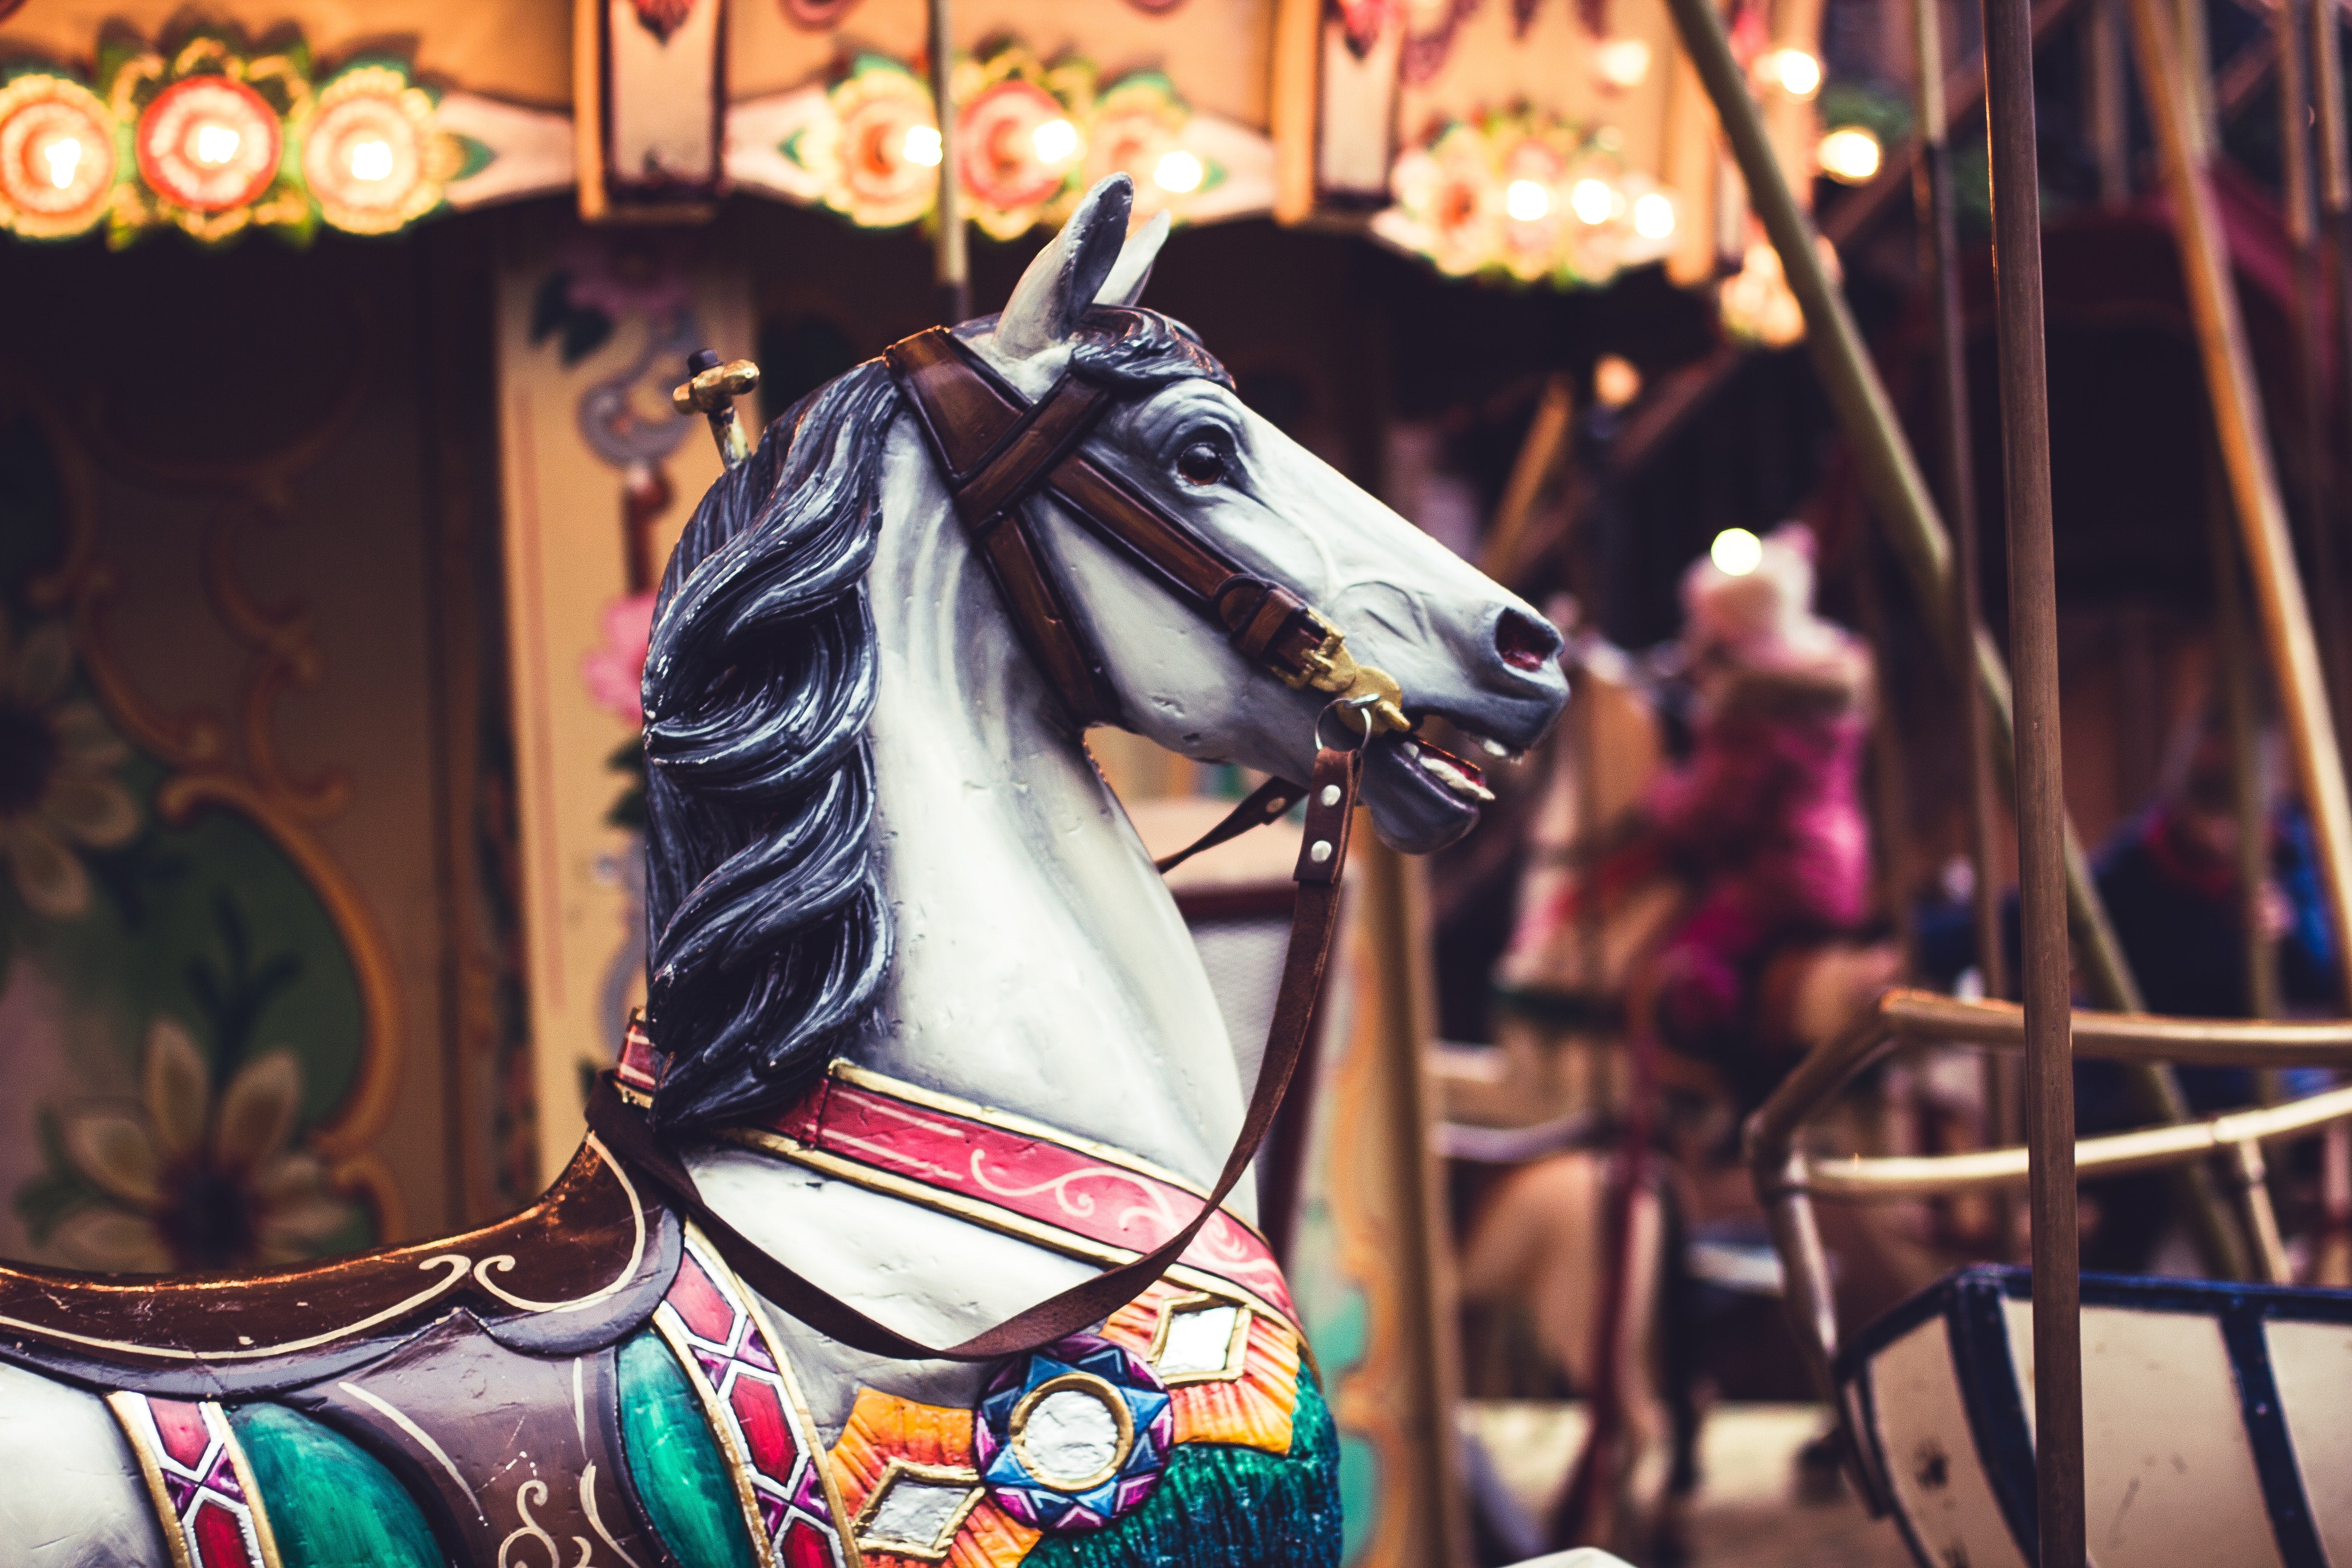 Fairground Ponies by Sophie Allport